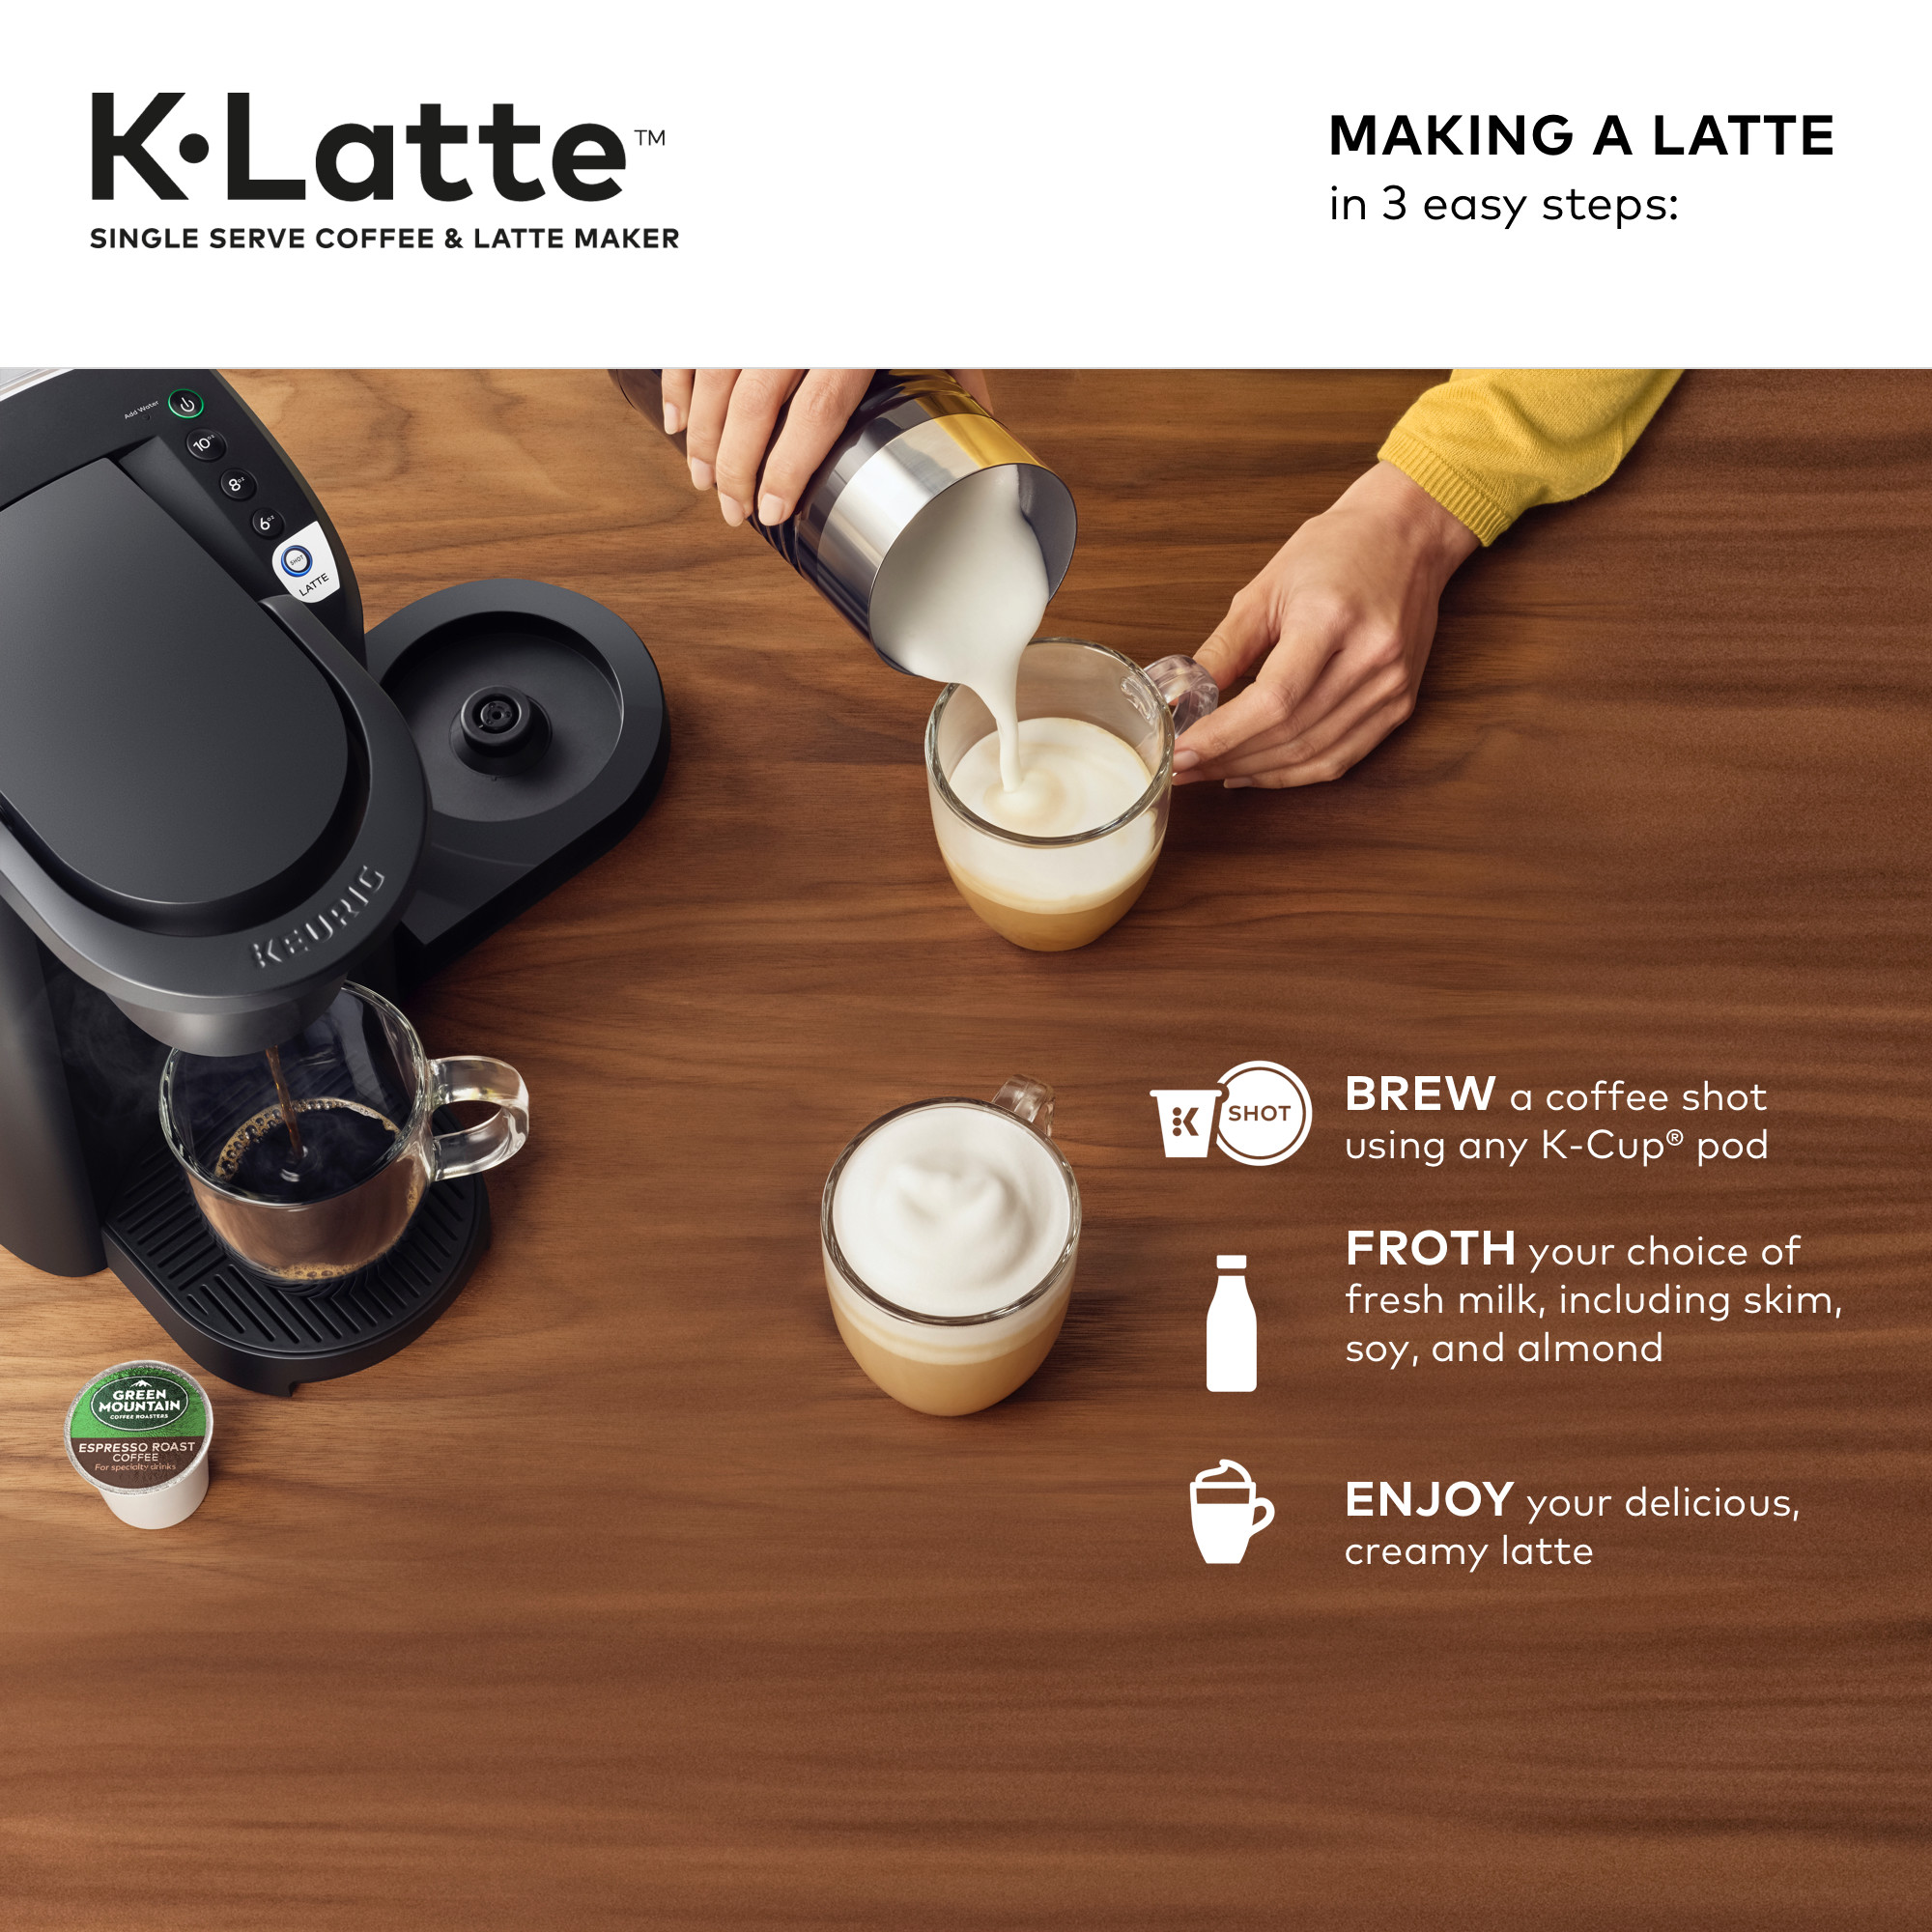 Keurig K-Latte Single Serve K-Cup Coffee and Latte Maker, Black - image 3 of 12